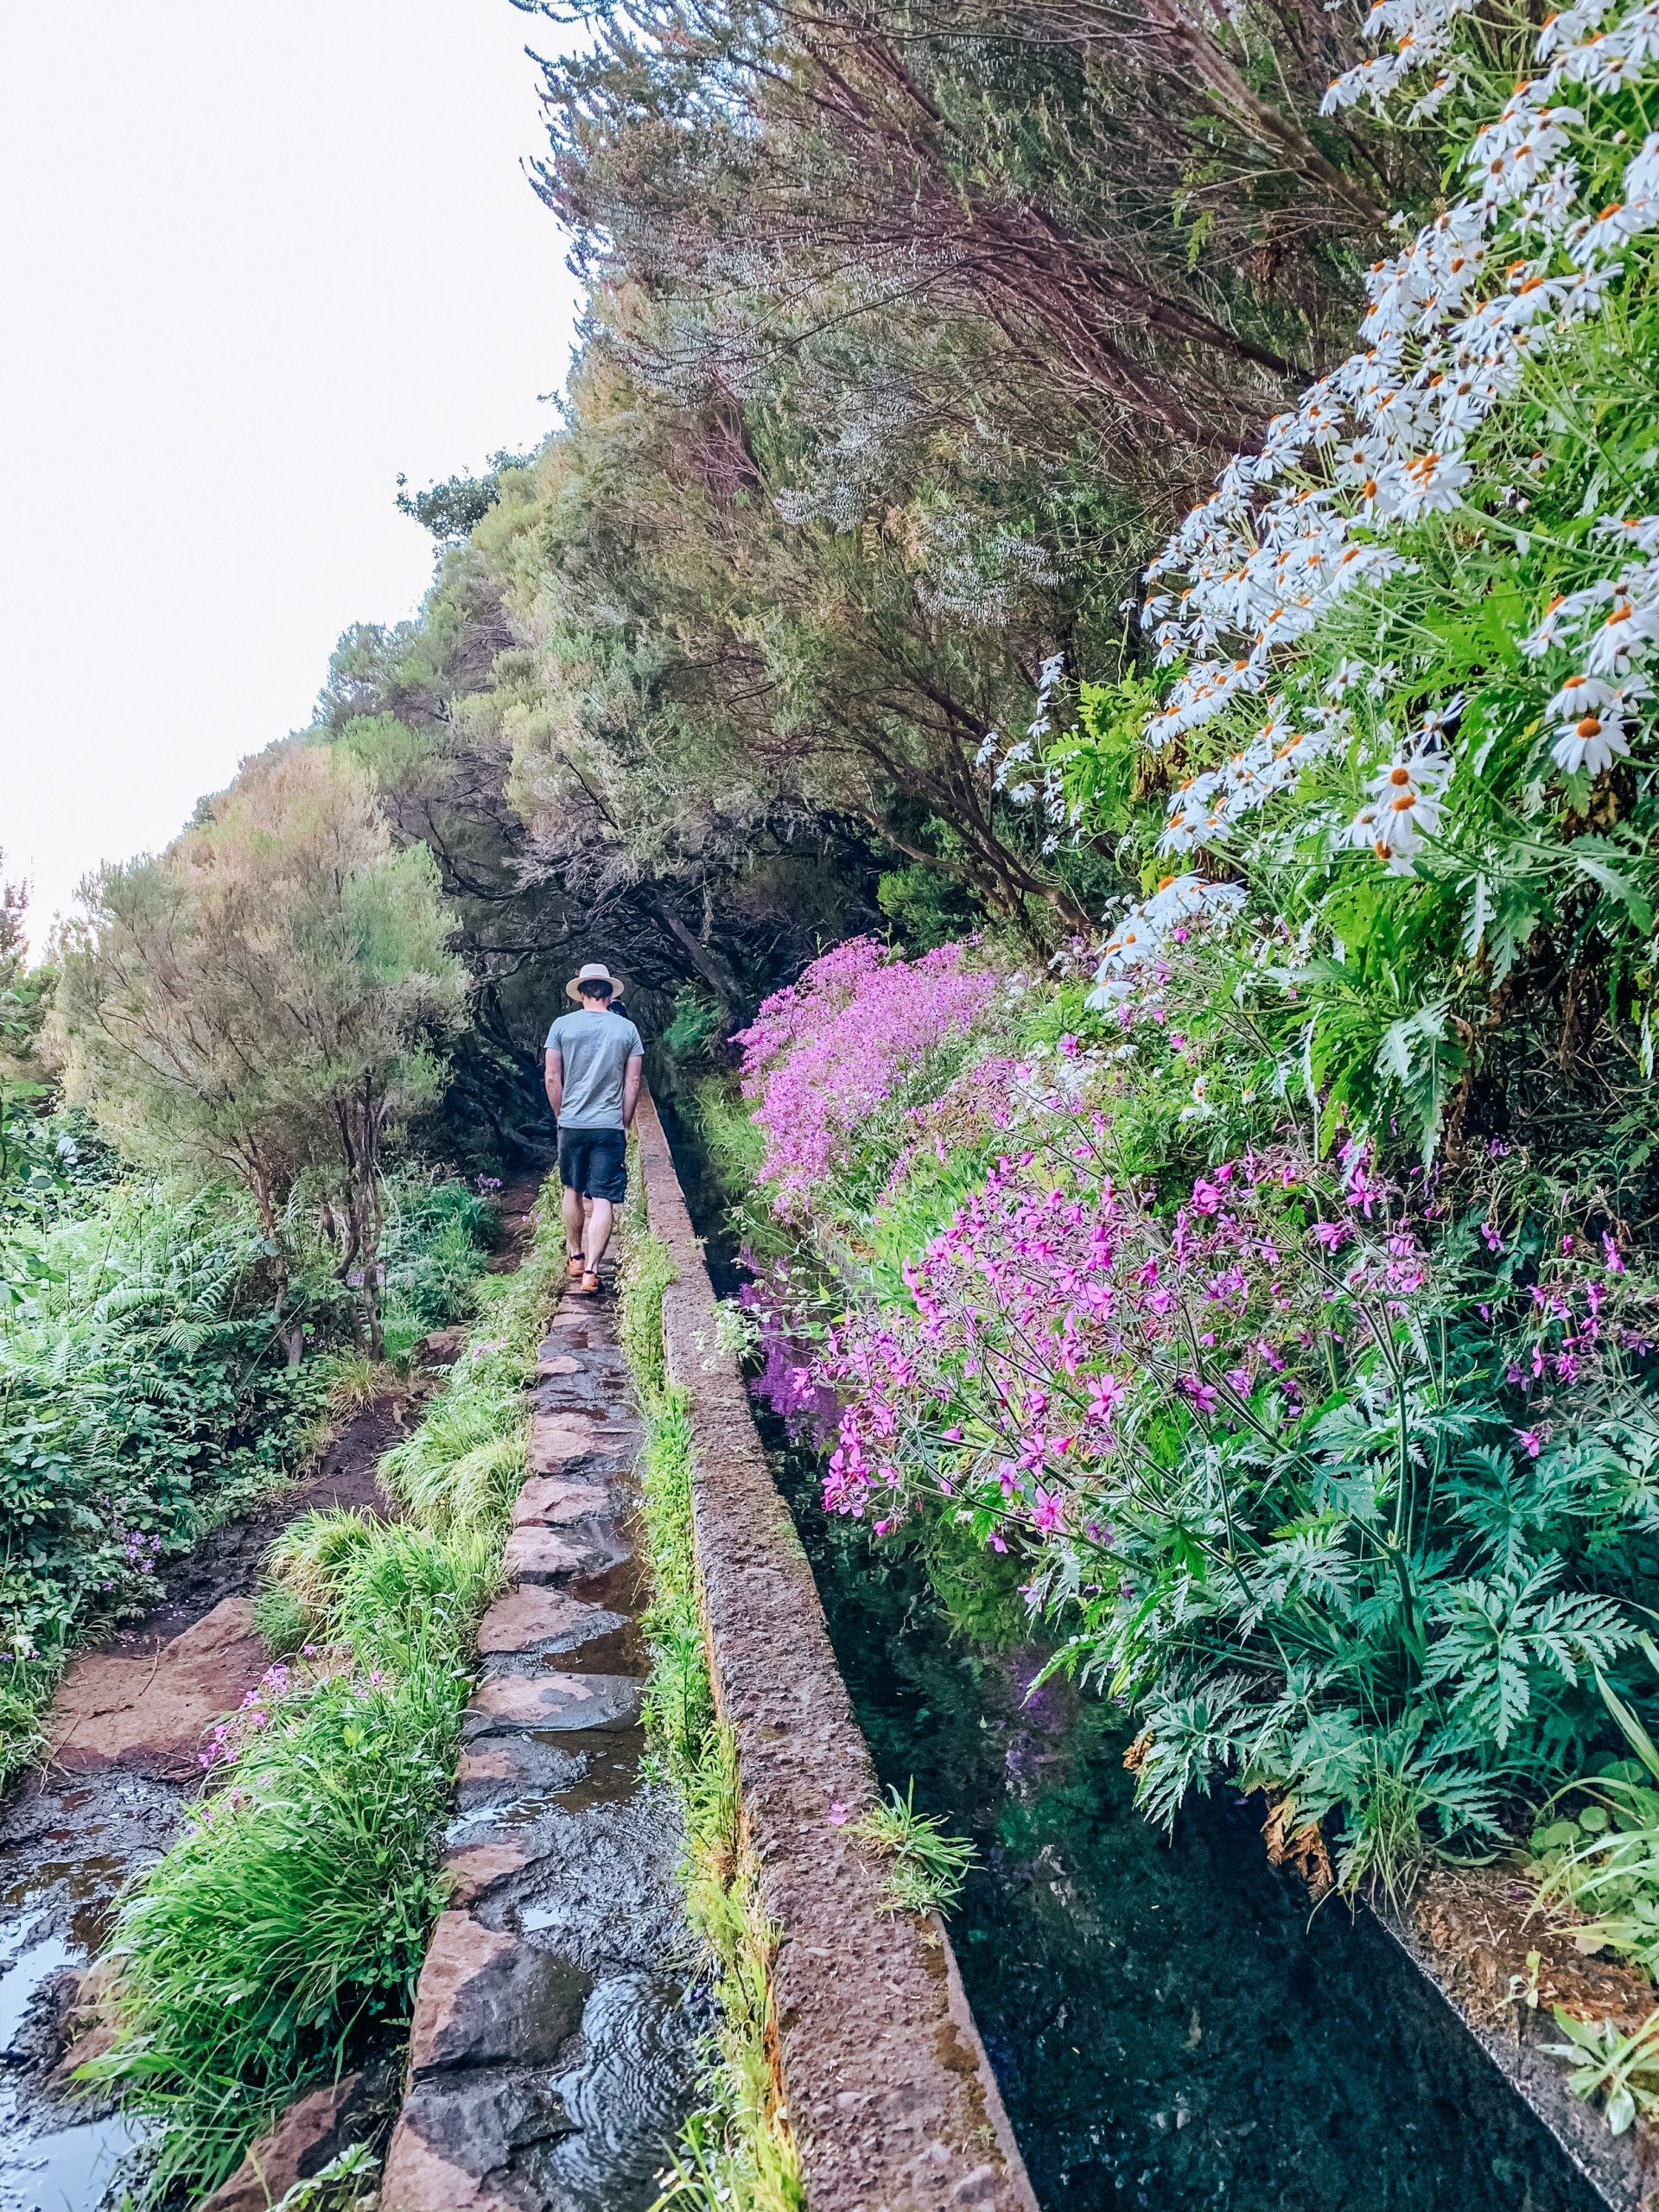 Levada Das 25 Fontes route in Madeira